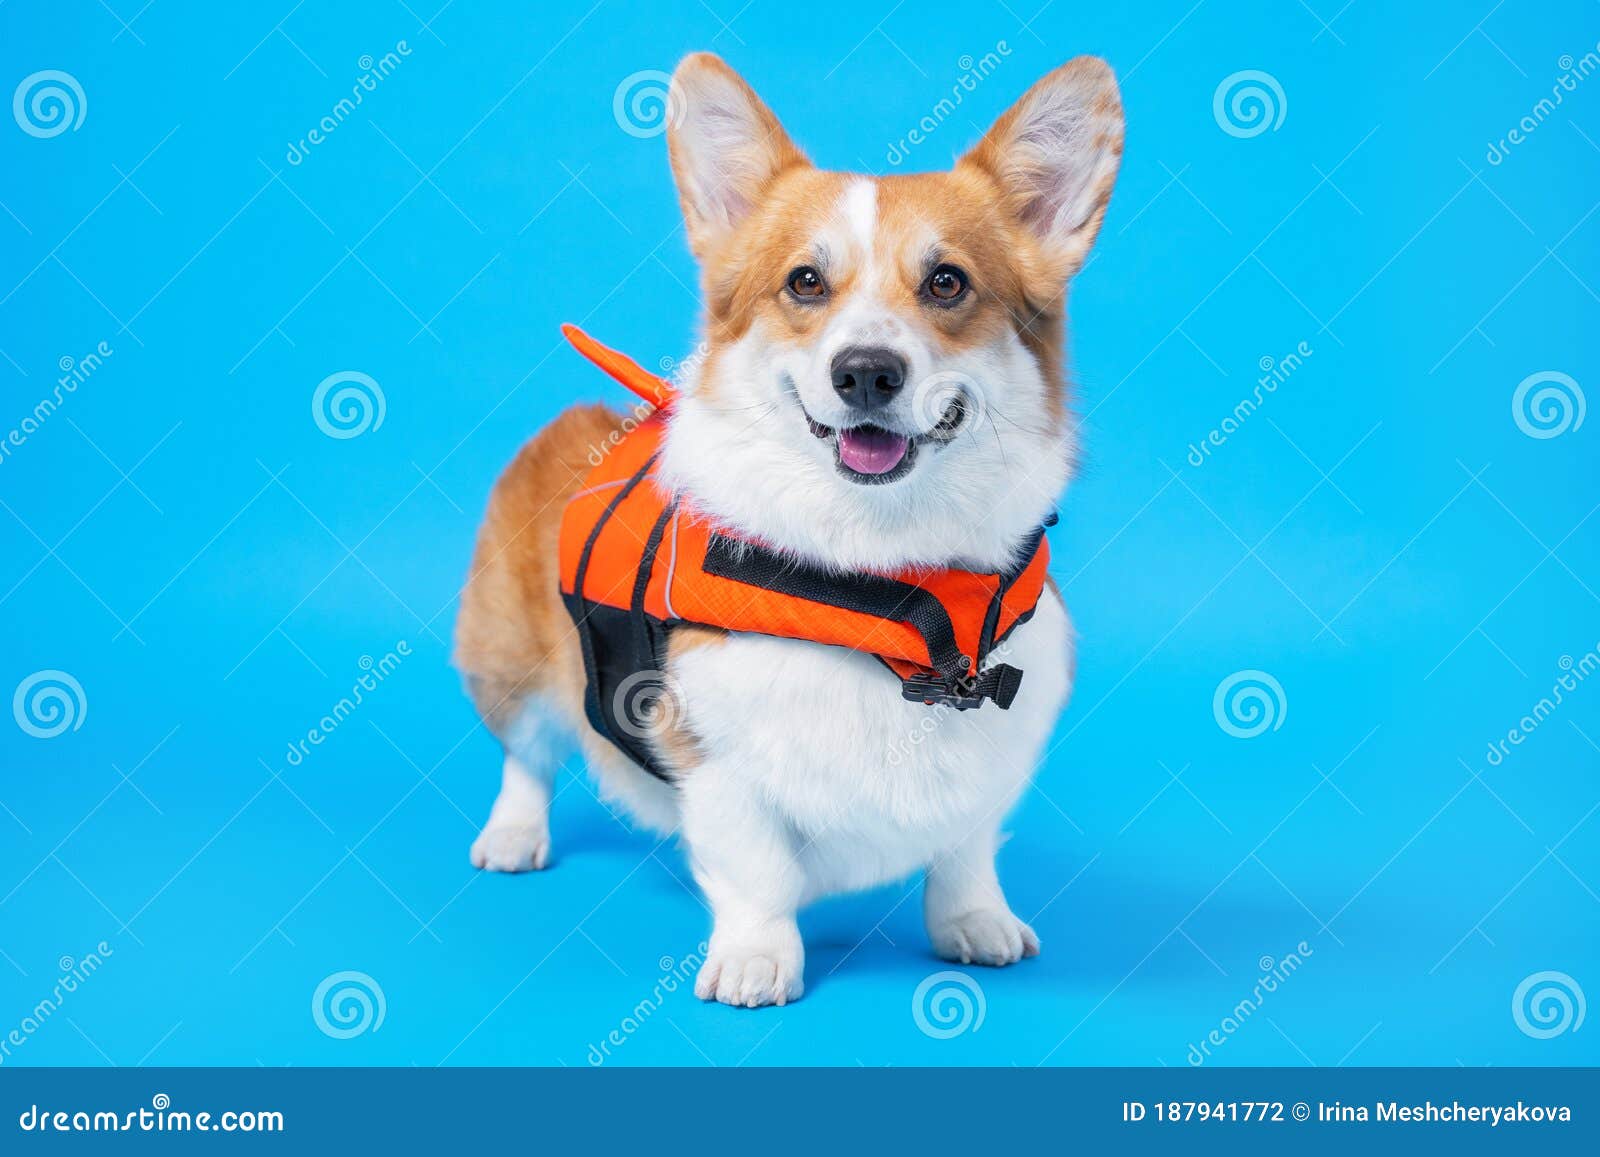 corgi life jacket